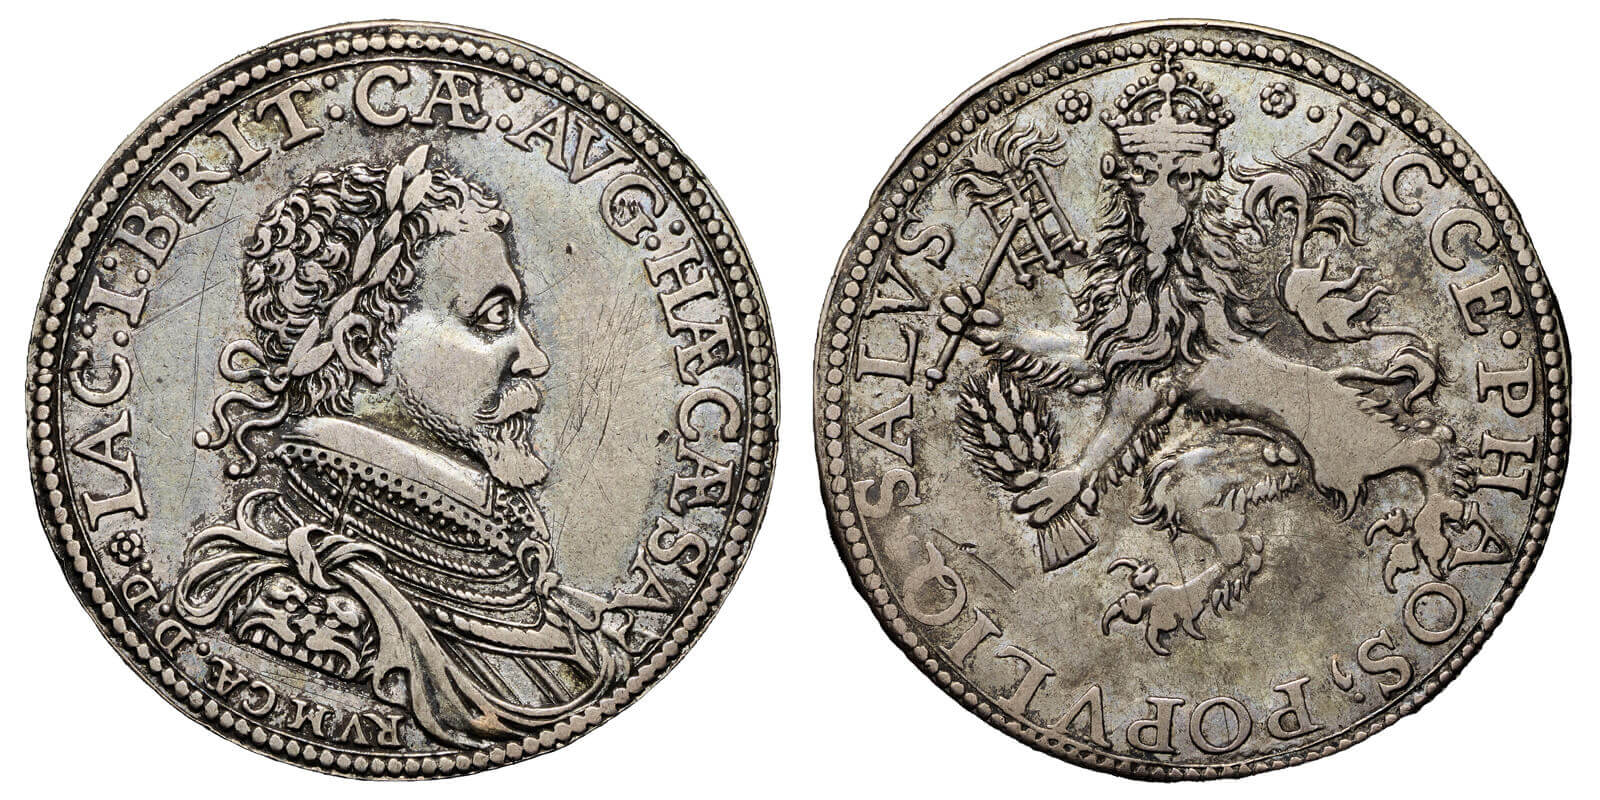 James I coronation medal.jpg